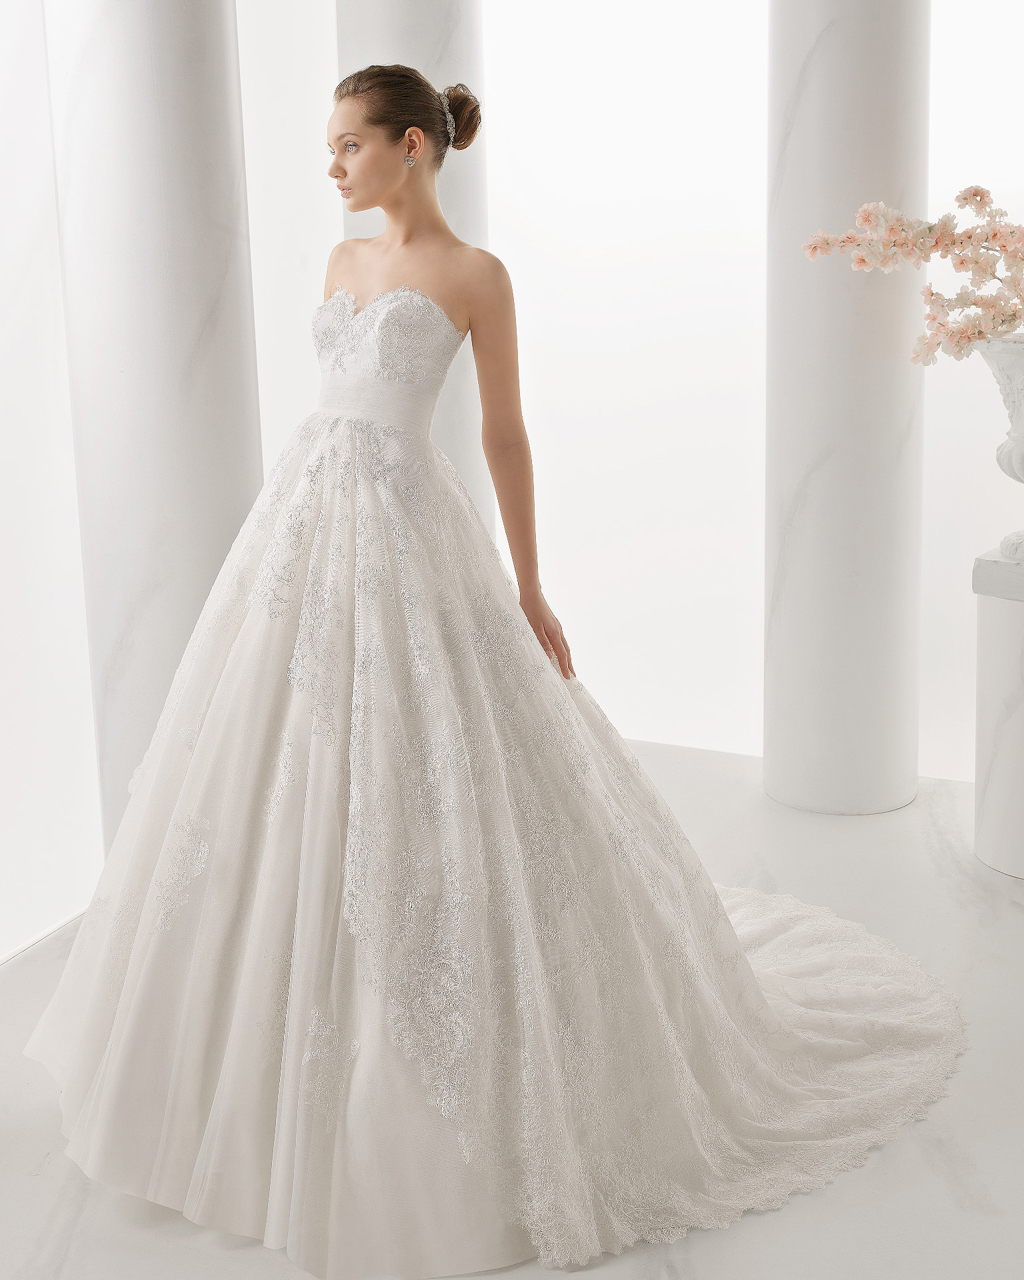 Alma Novia by Rosa Clara - Simply Love Wedding | Designer Wedding Gowns